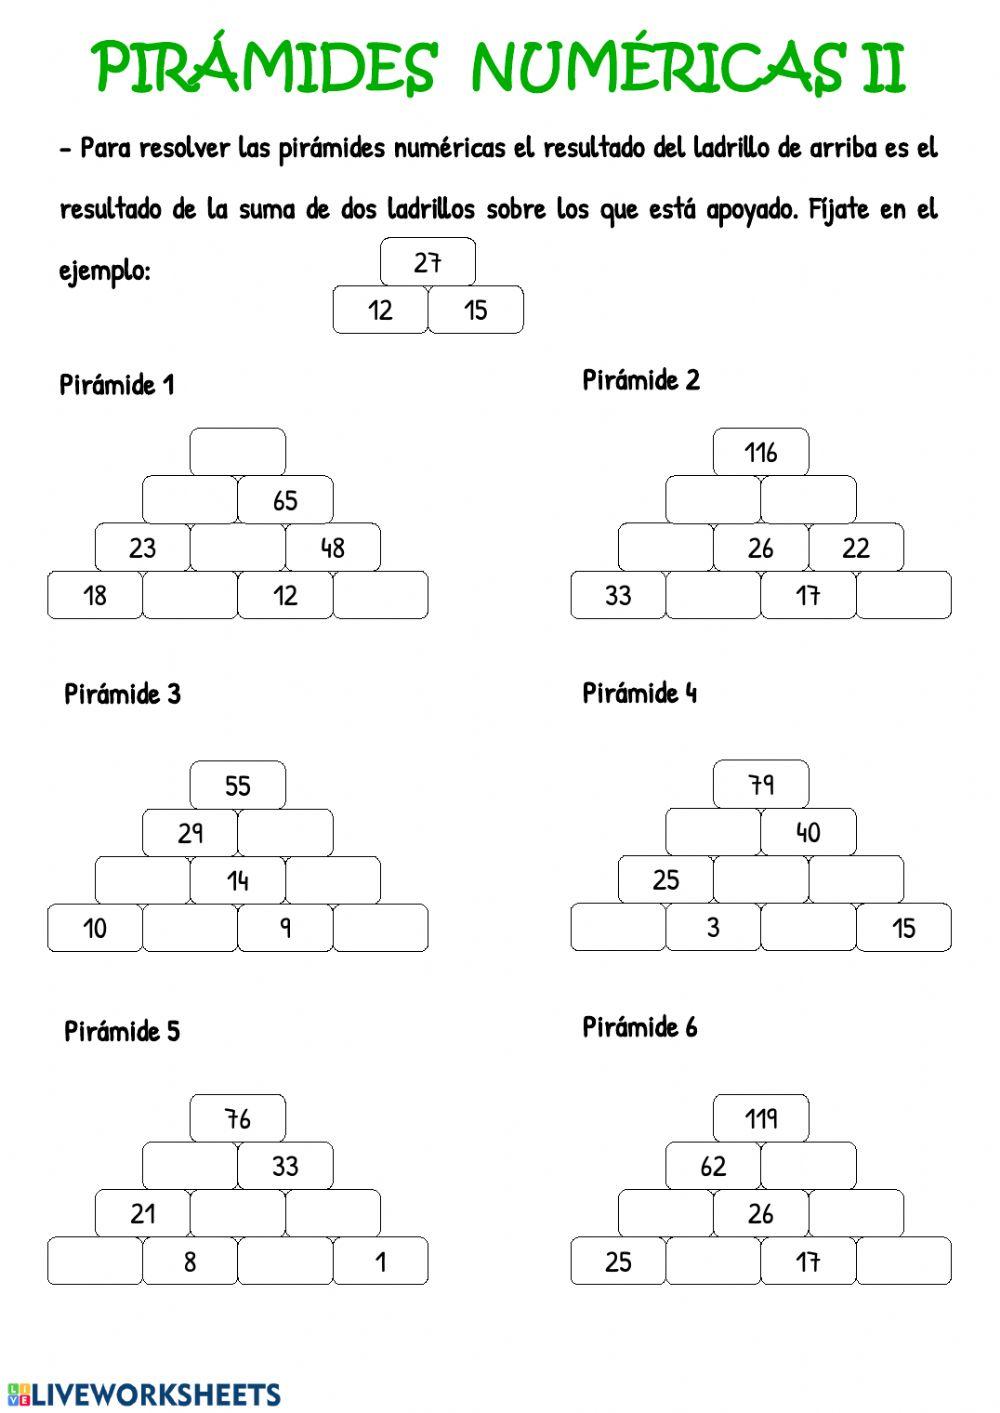 Pirámides numérica II